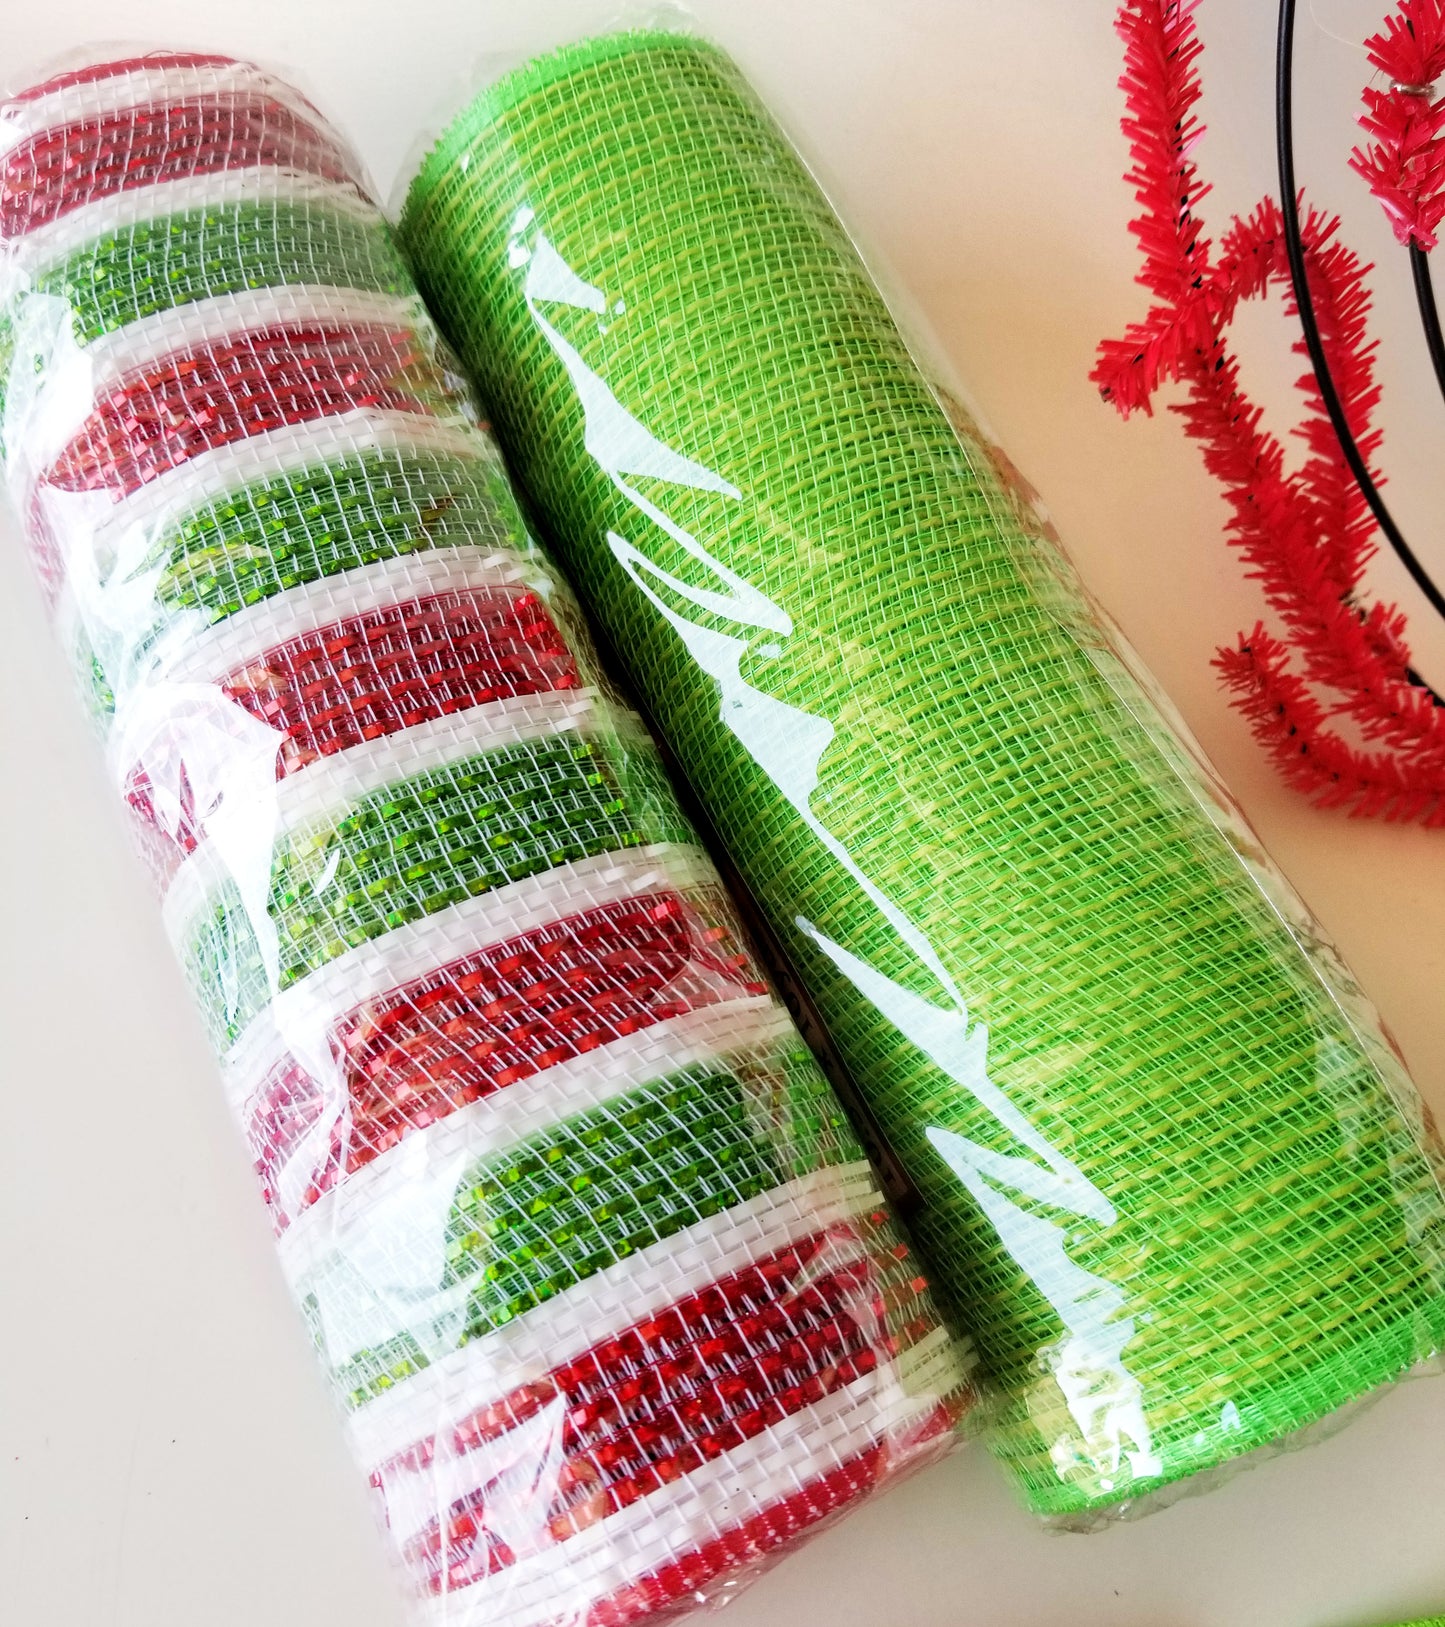 Merry Christmas Wreath Kit | Red Lime - Designer DIY